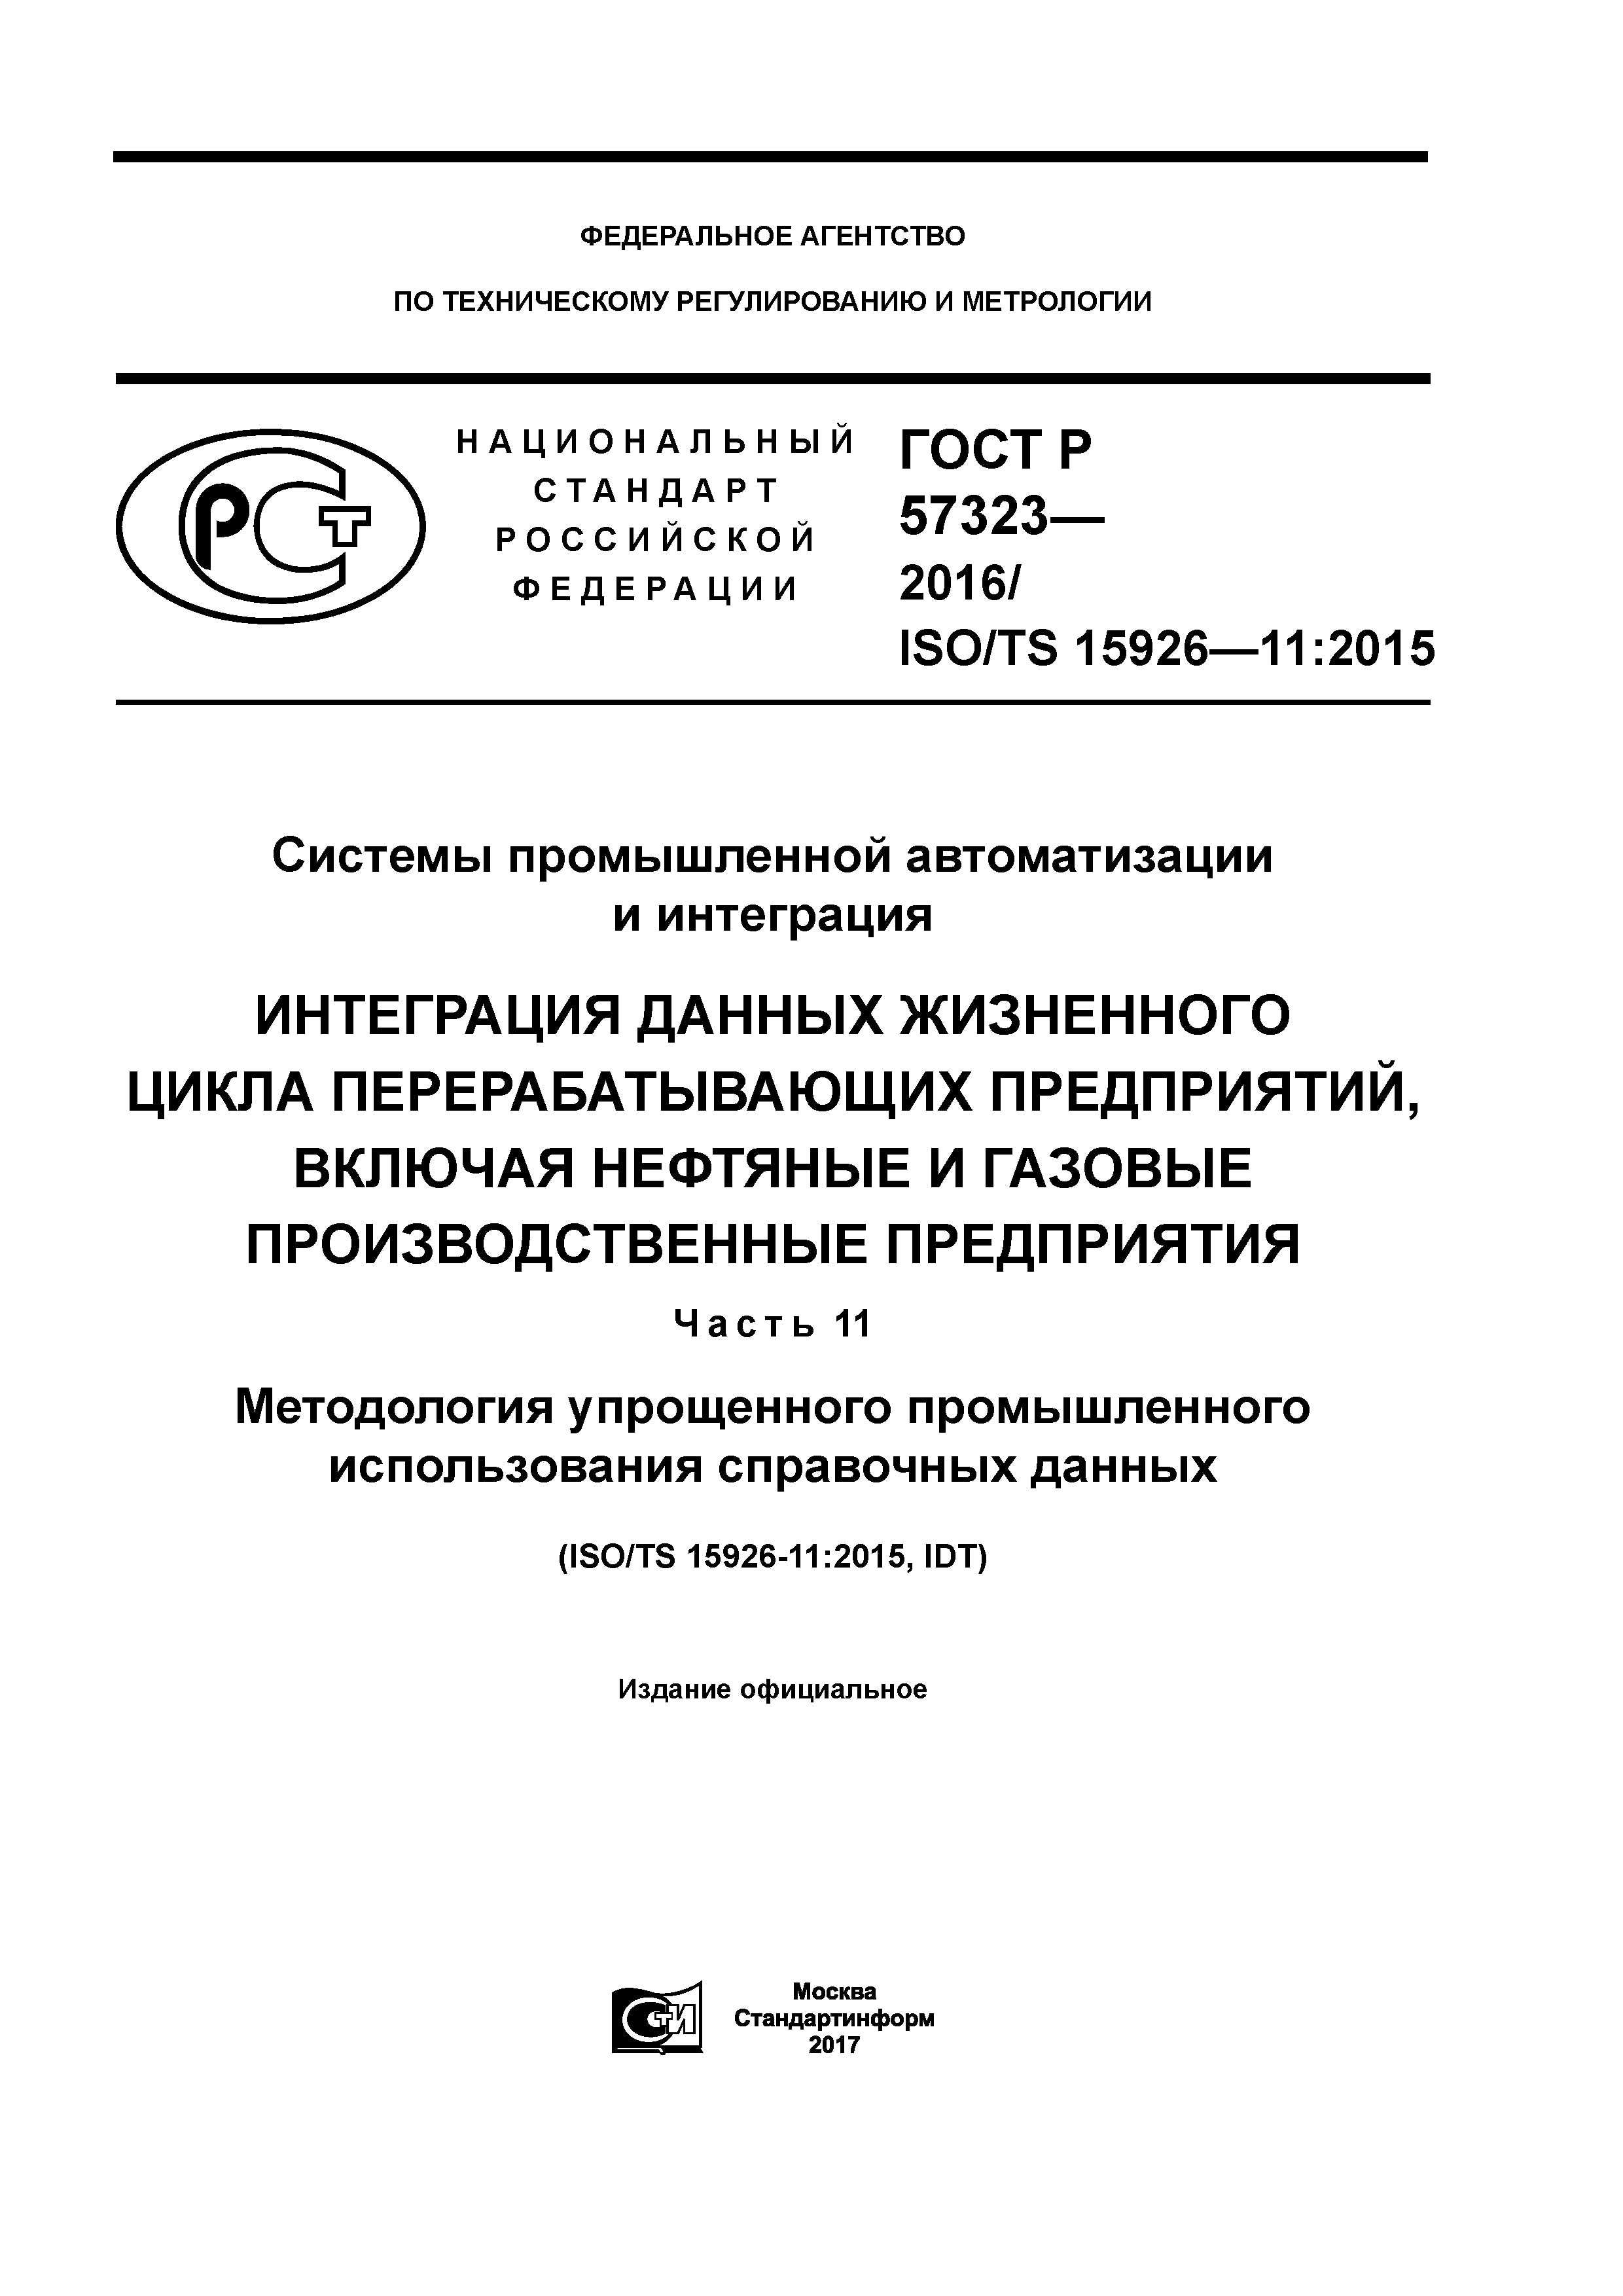 ГОСТ Р 57323-2016